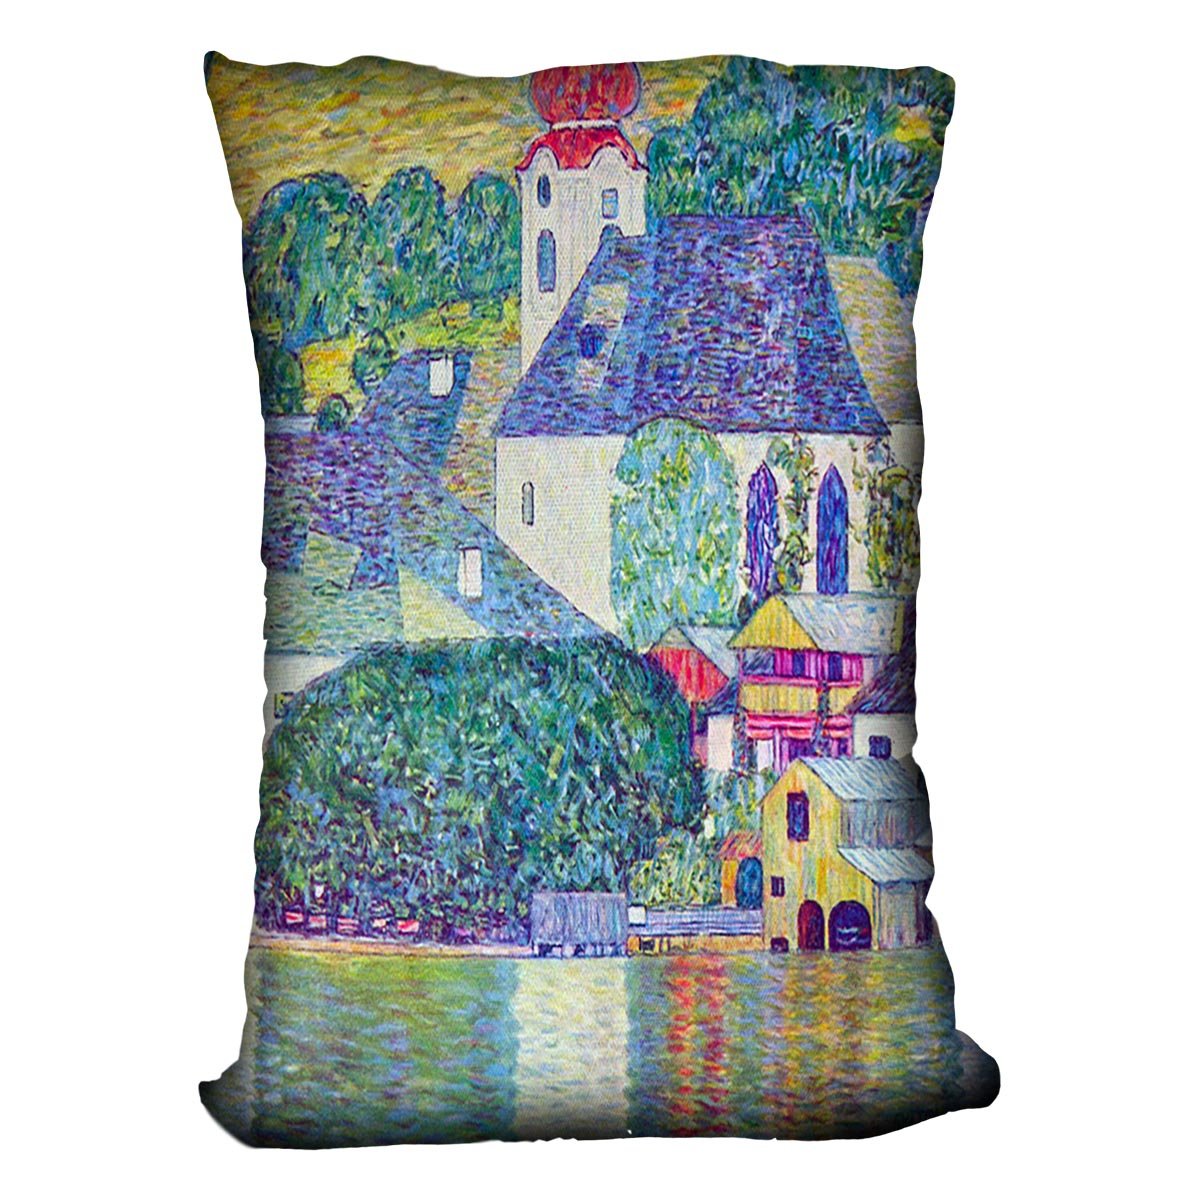 St. Wolfgang Church by Klimt Throw Pillow